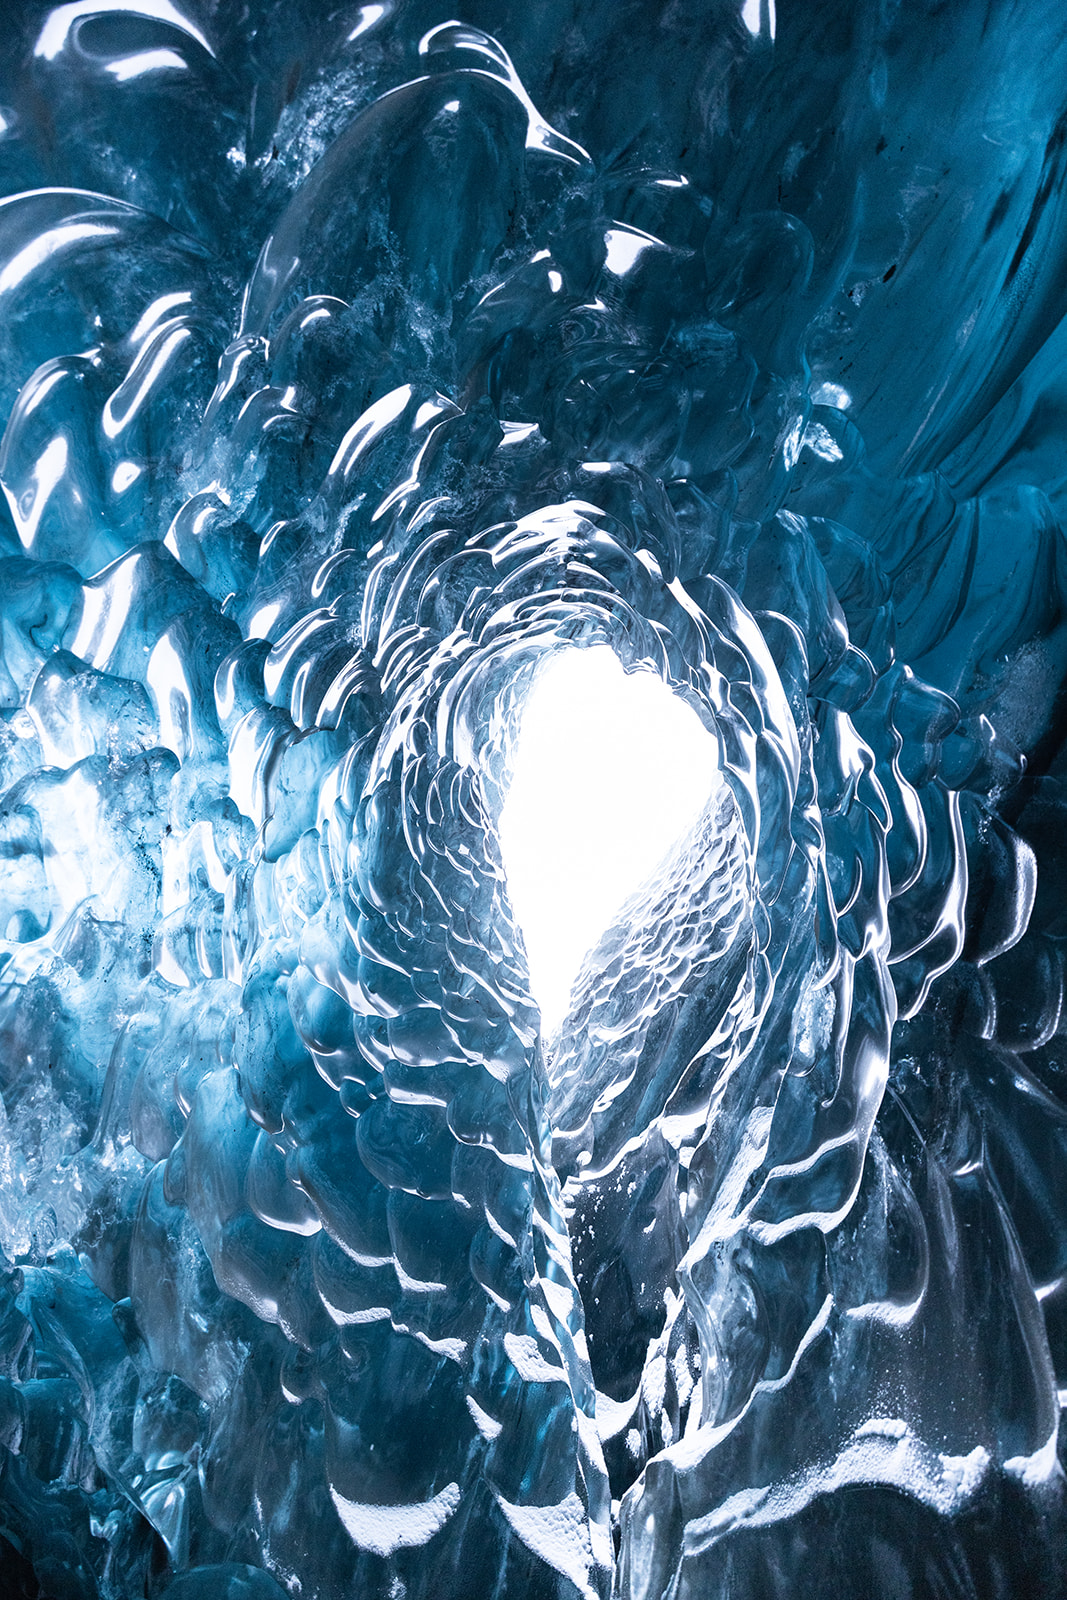 Iceland glacier ice cave